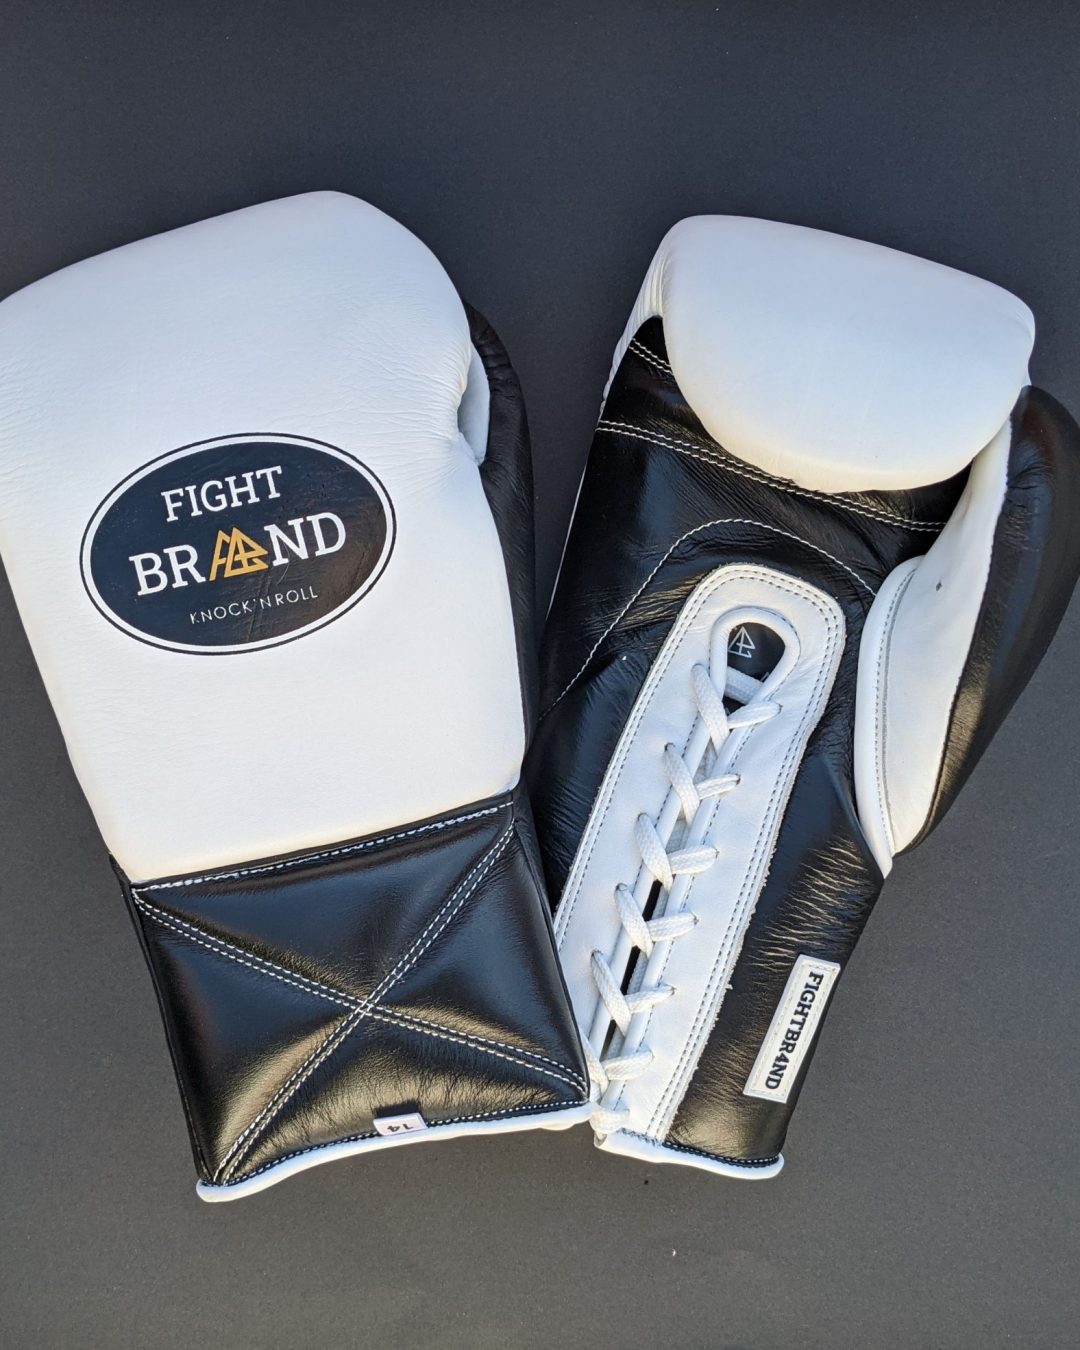 Black and white boxing gloves